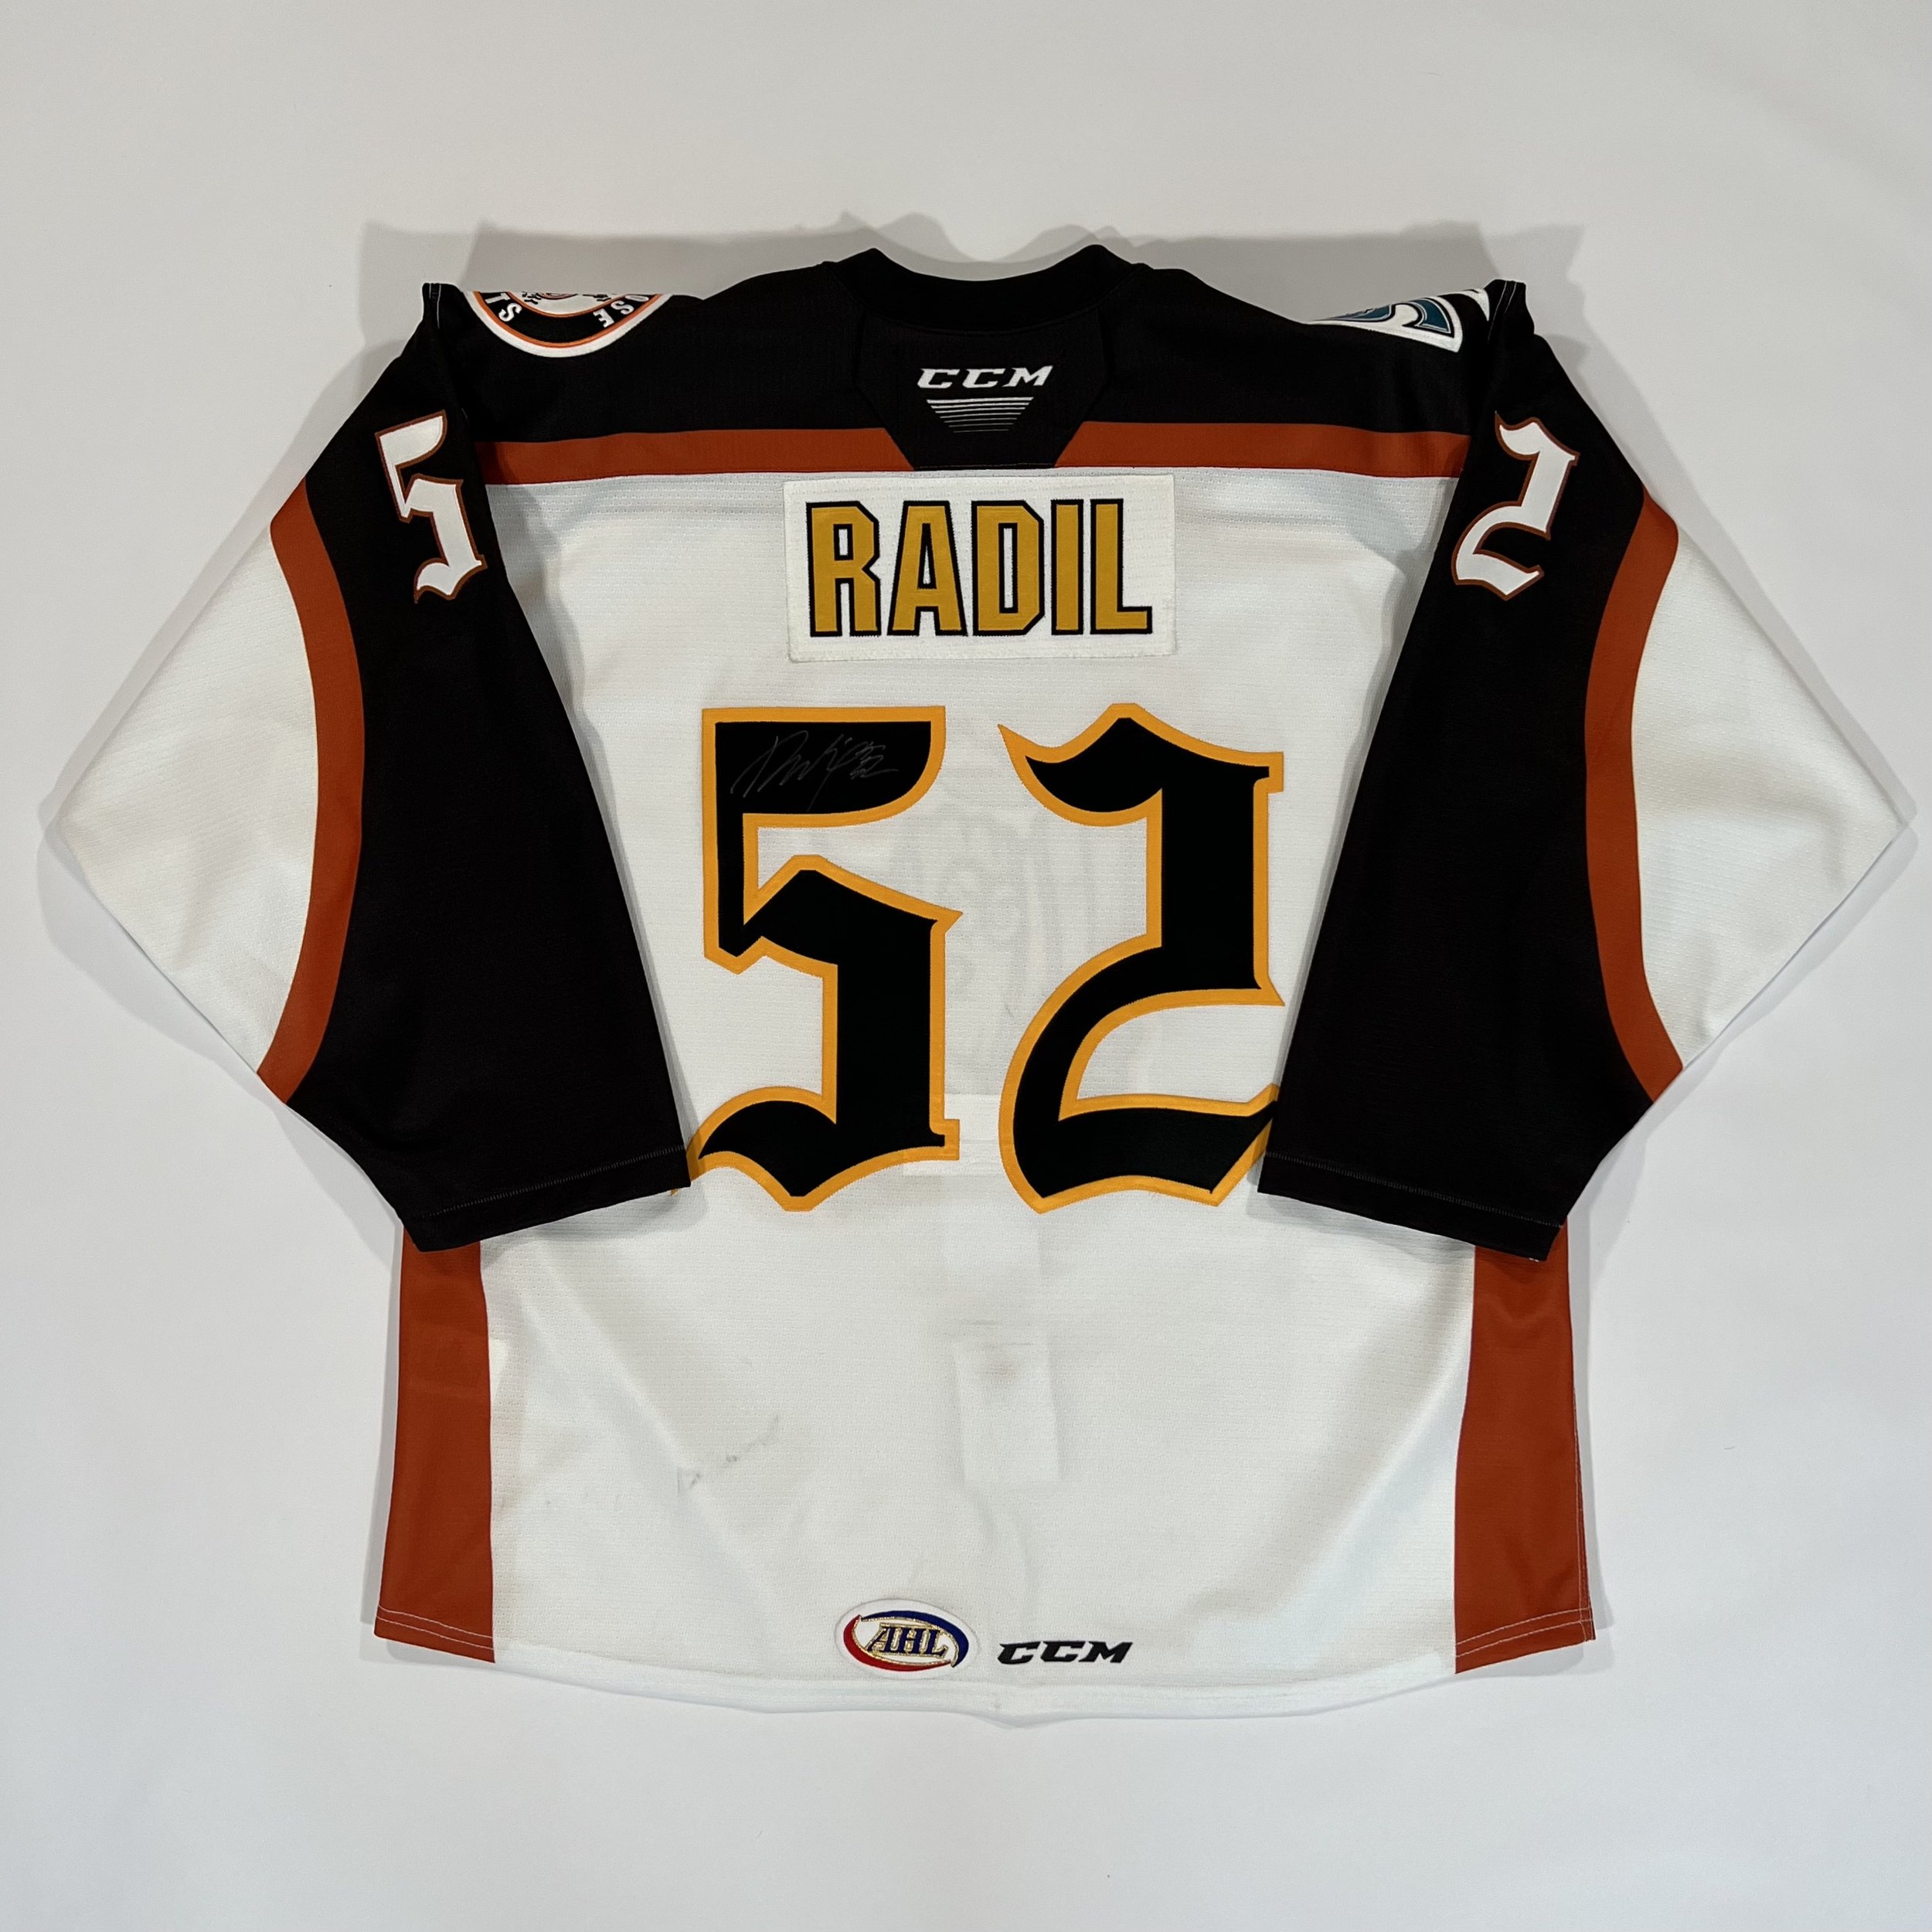 2014-2015 Matt Taorminca AHL All-Star Game Worn-Warm-Up jersey.